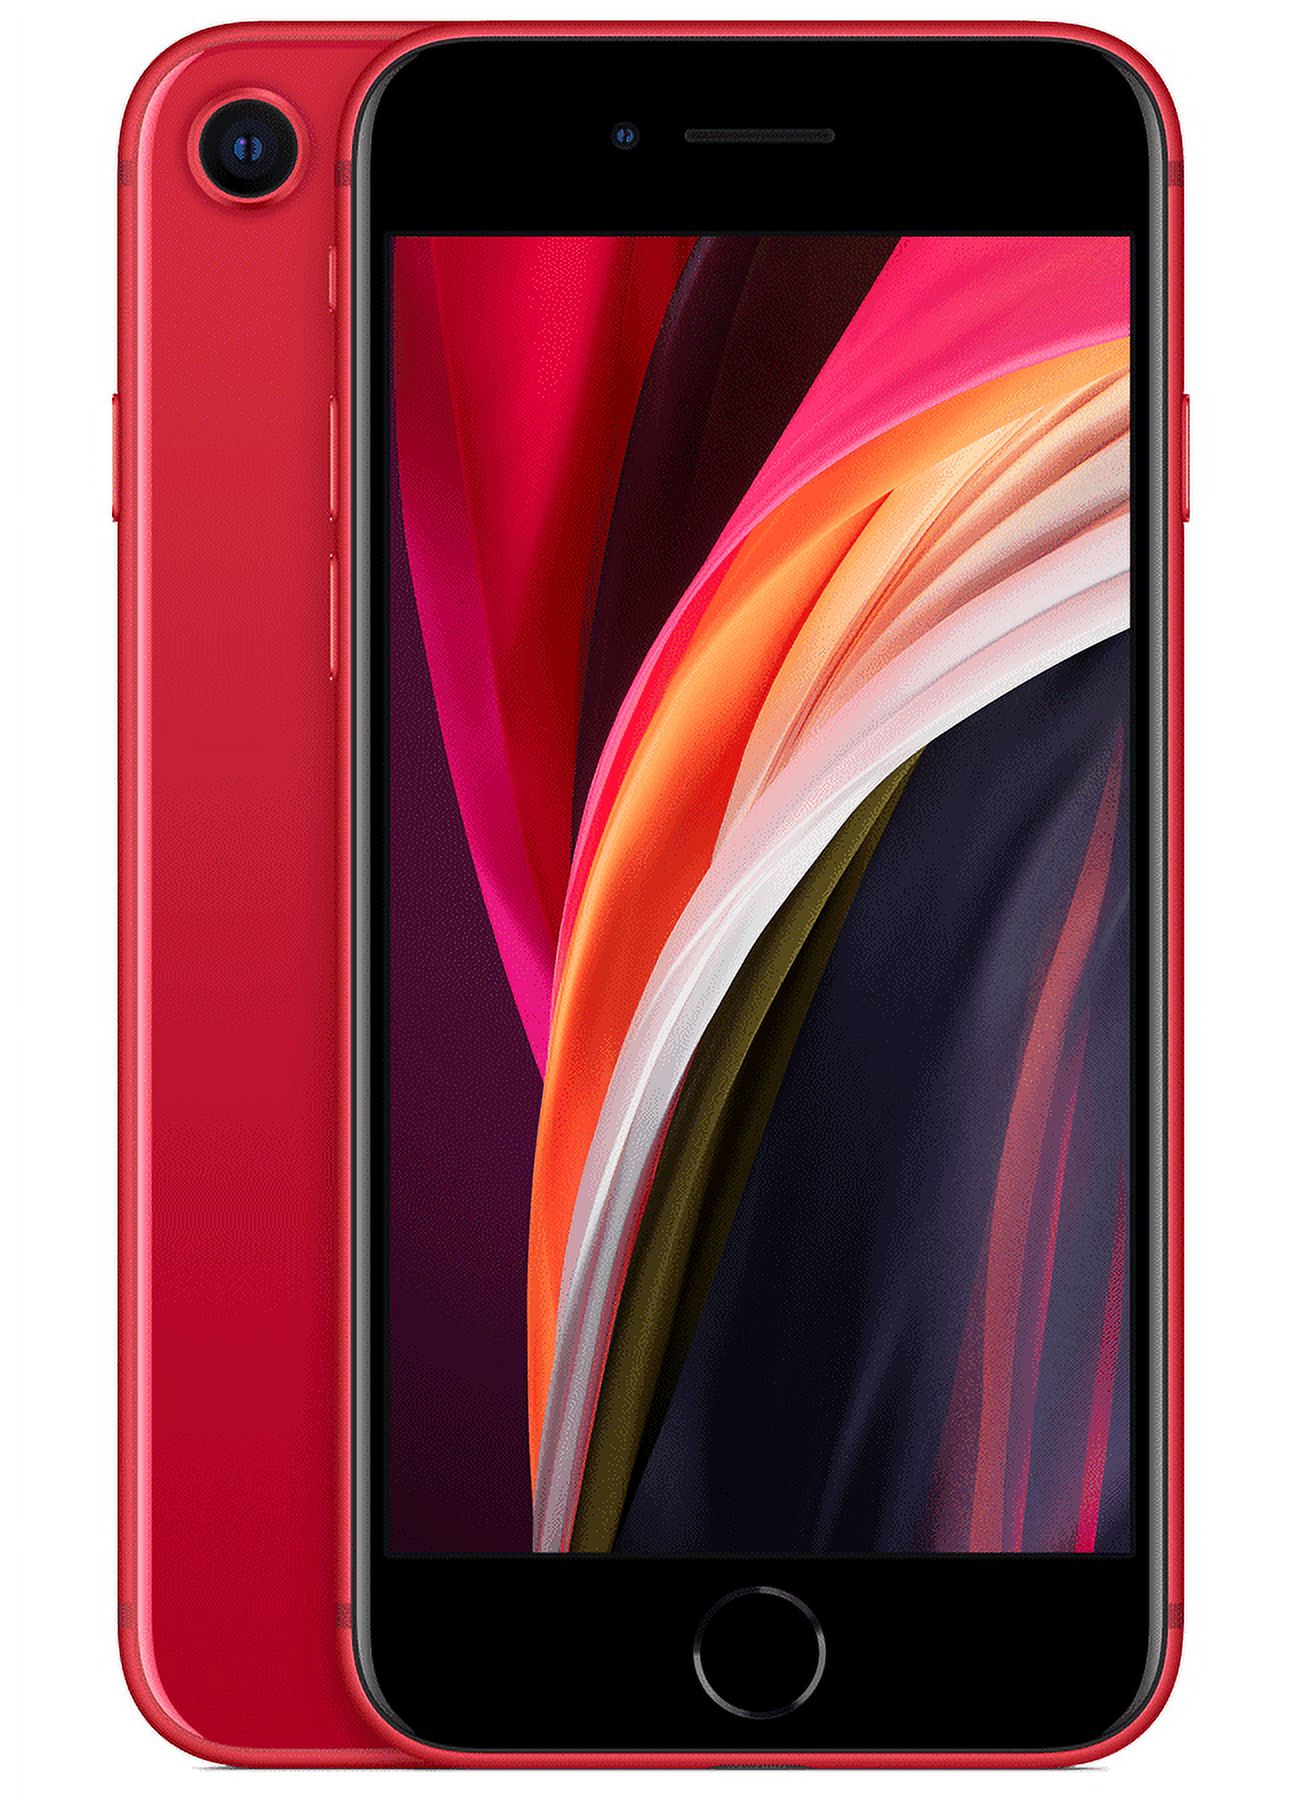 Apple iPhone SE (2020) 128GB GSM/CDMA Fully Unlocked Phone - Red (Grade B Used) - image 1 of 4